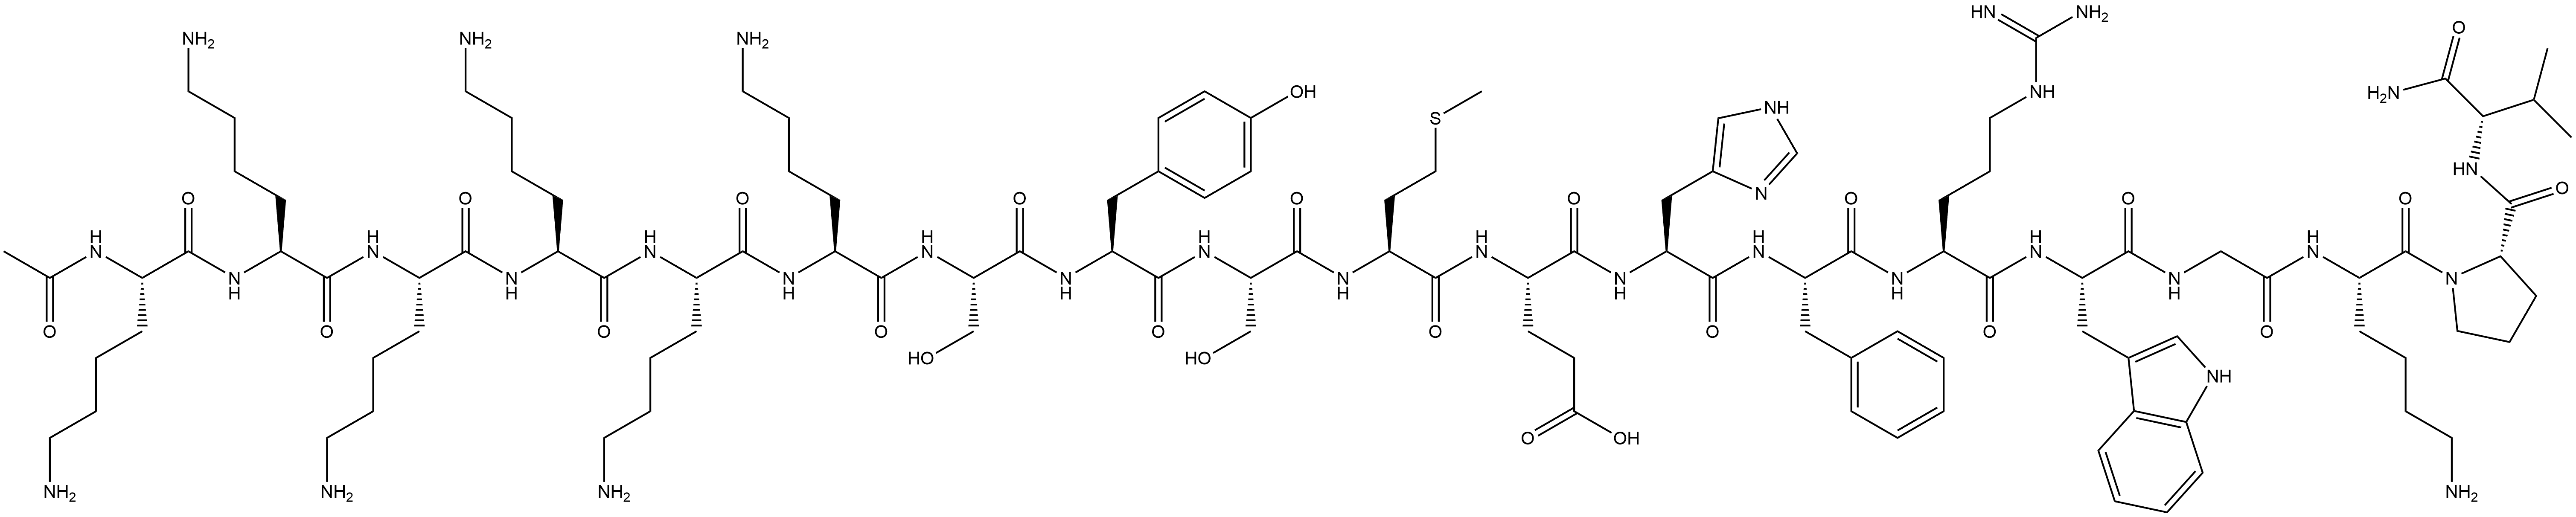 L-Valinamide, N2-acetyl-L-lysyl-L-lysyl-L-lysyl-L-lysyl-L-lysyl-L-lysyl-L-seryl-L-tyrosyl-L-seryl-L-methionyl-L-α-glutamyl-L-histidyl-L-phenylalanyl-L-arginyl-L-tryptophylglycyl-L-lysyl-L-prolyl-|